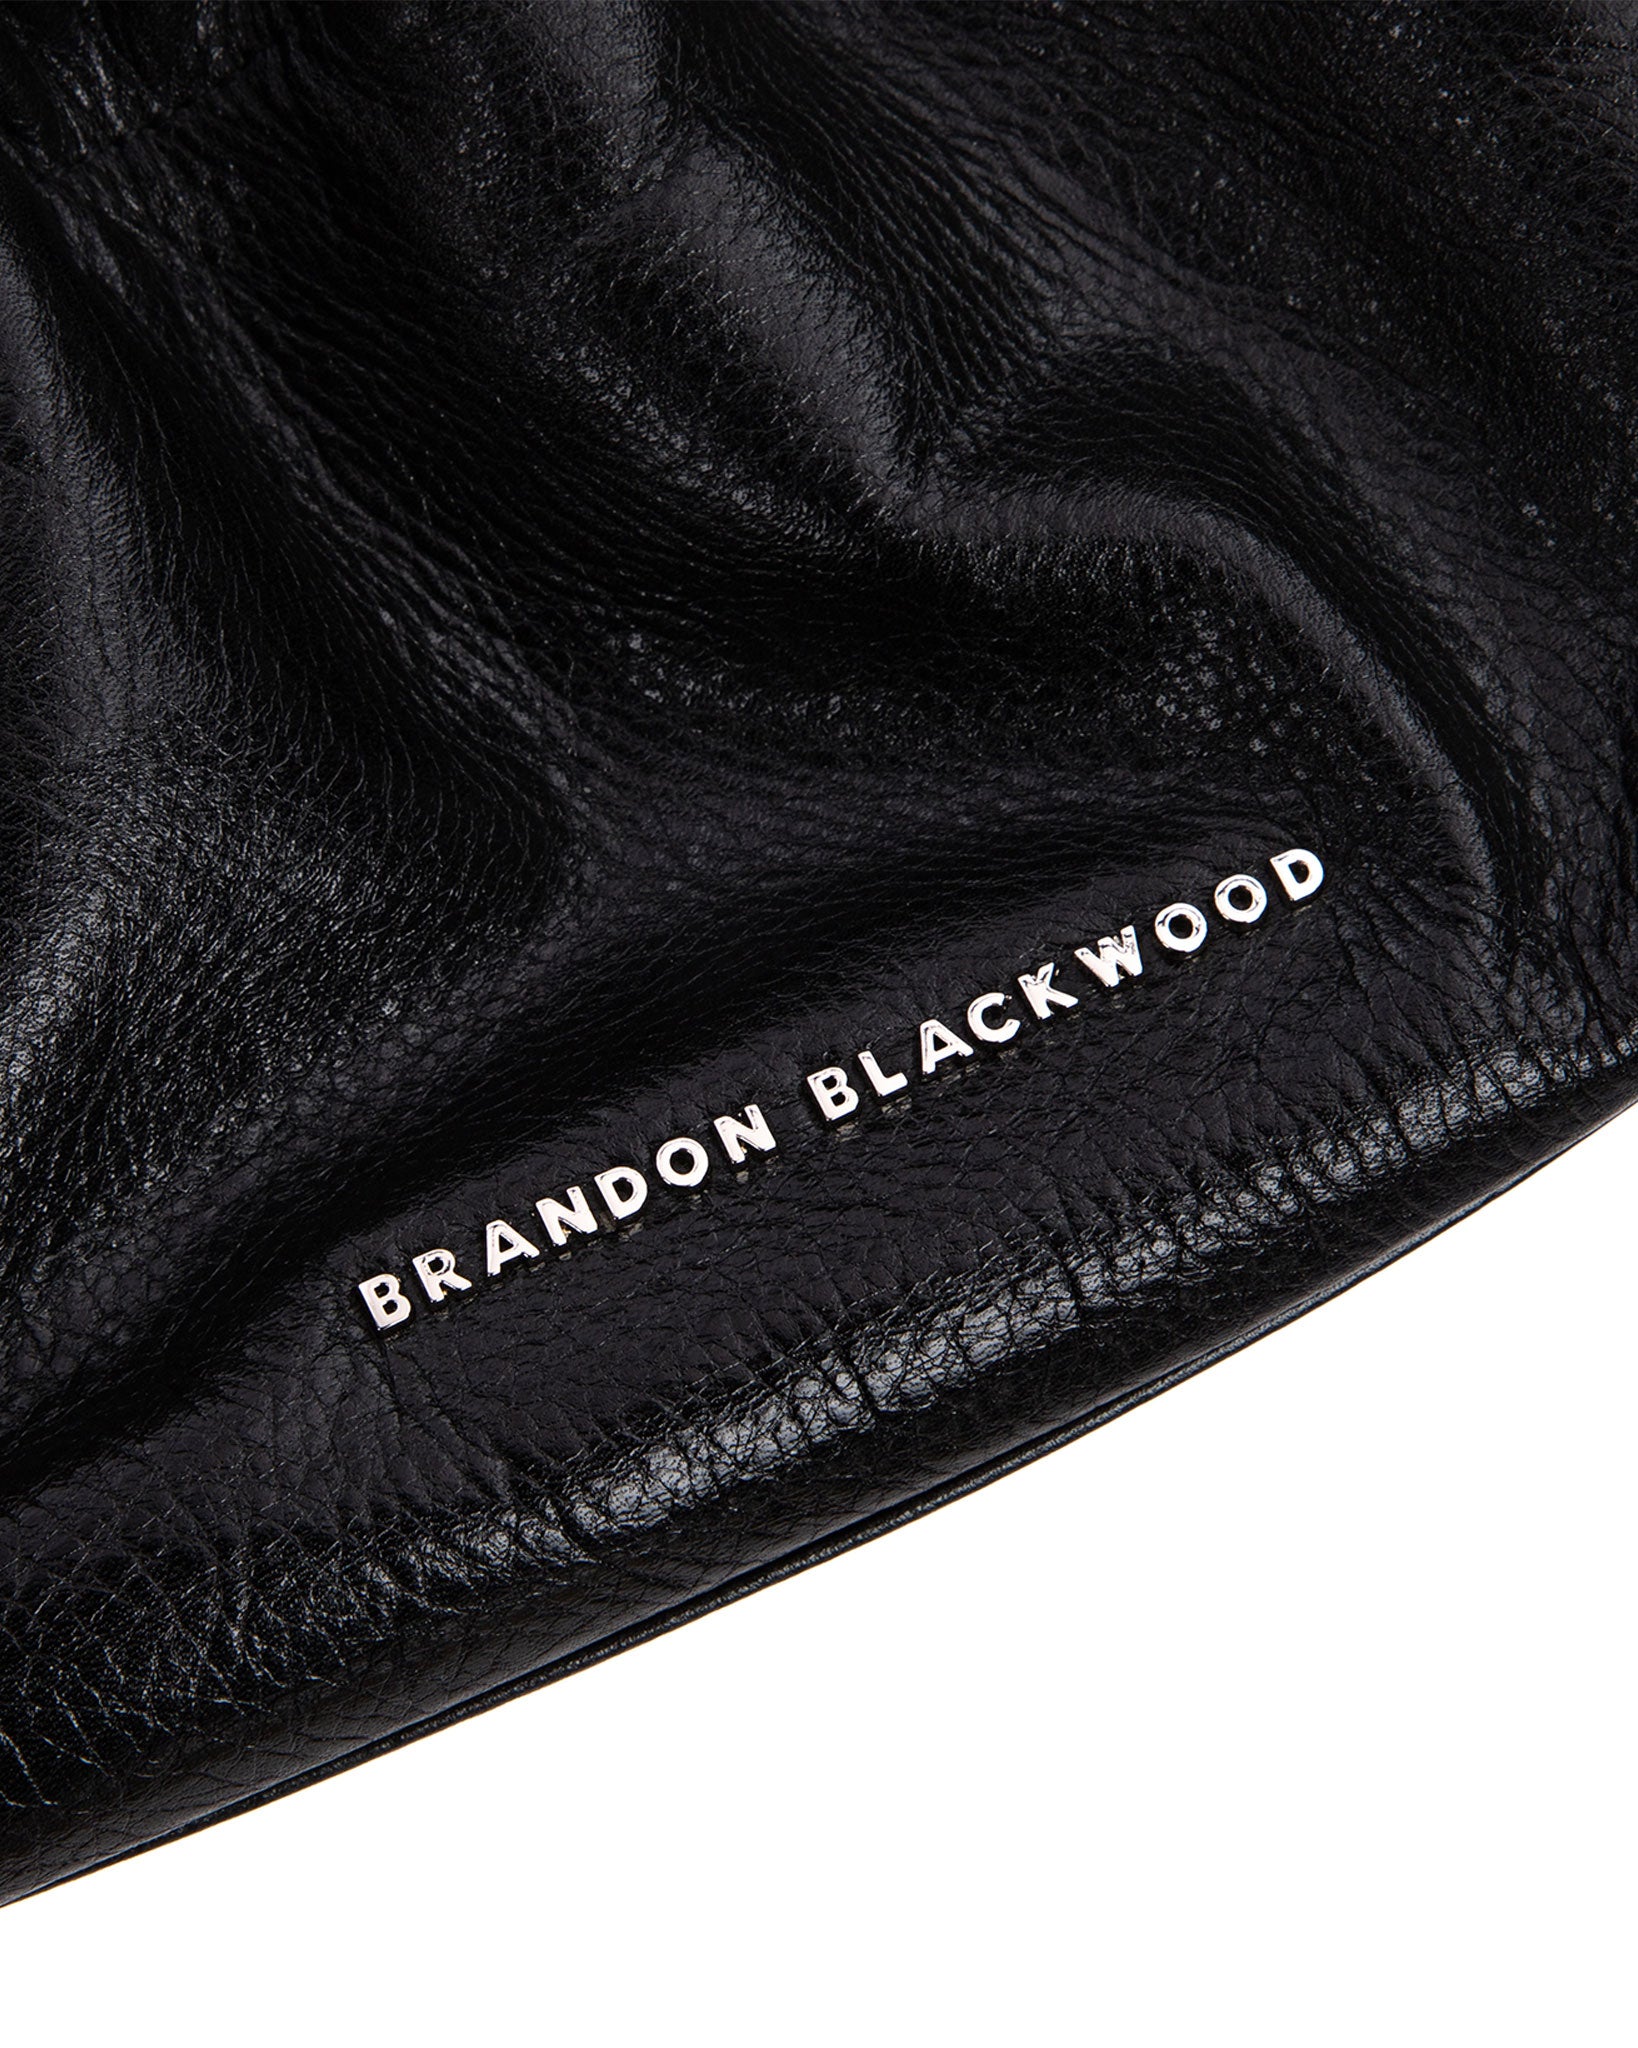 Brandon Blackwood New York - Nora Bag - Black/Silver